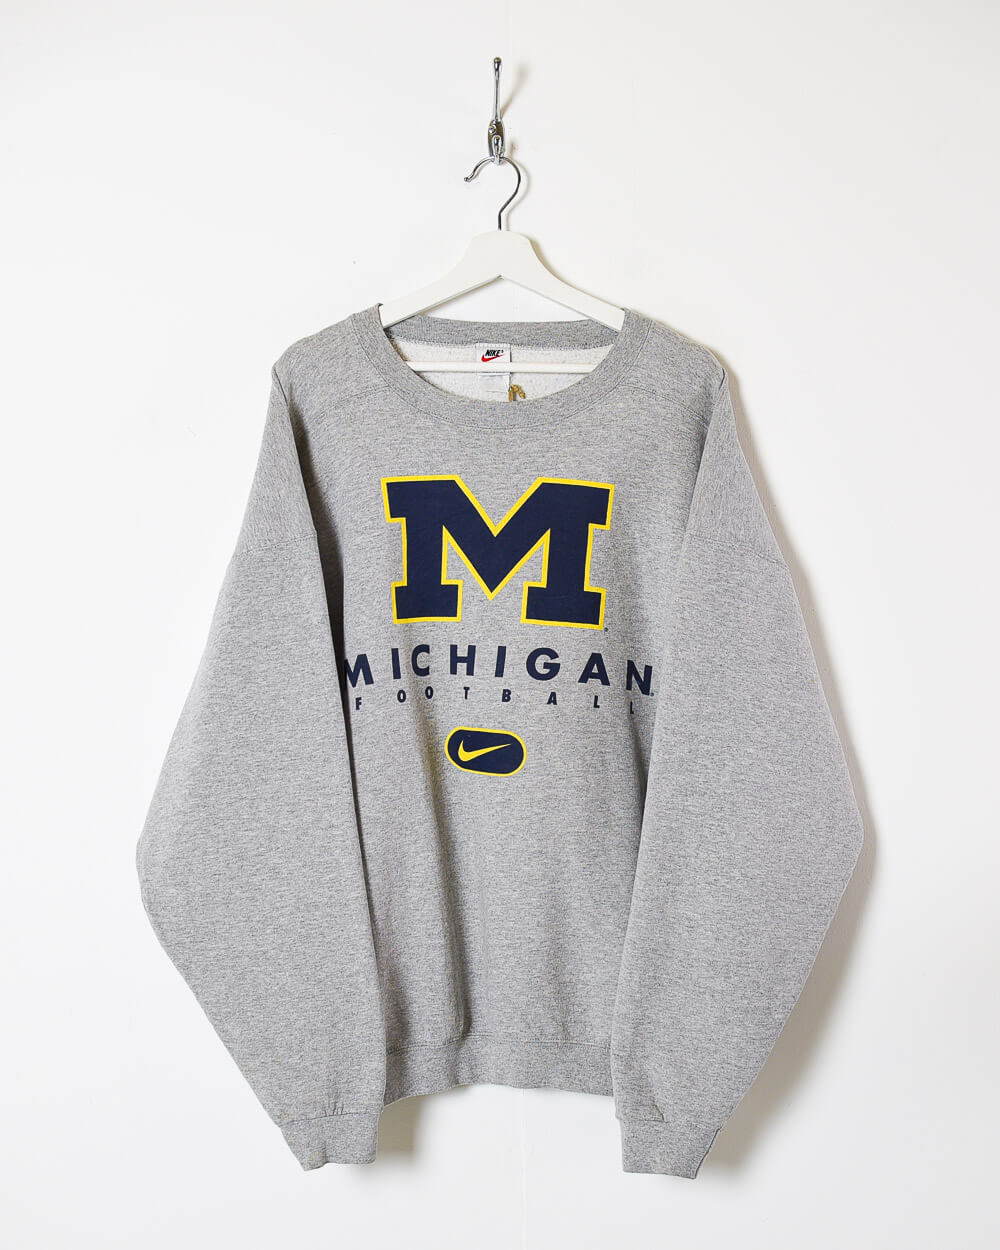 Stone Nike Michigan Football Sweatshirt - X-Large